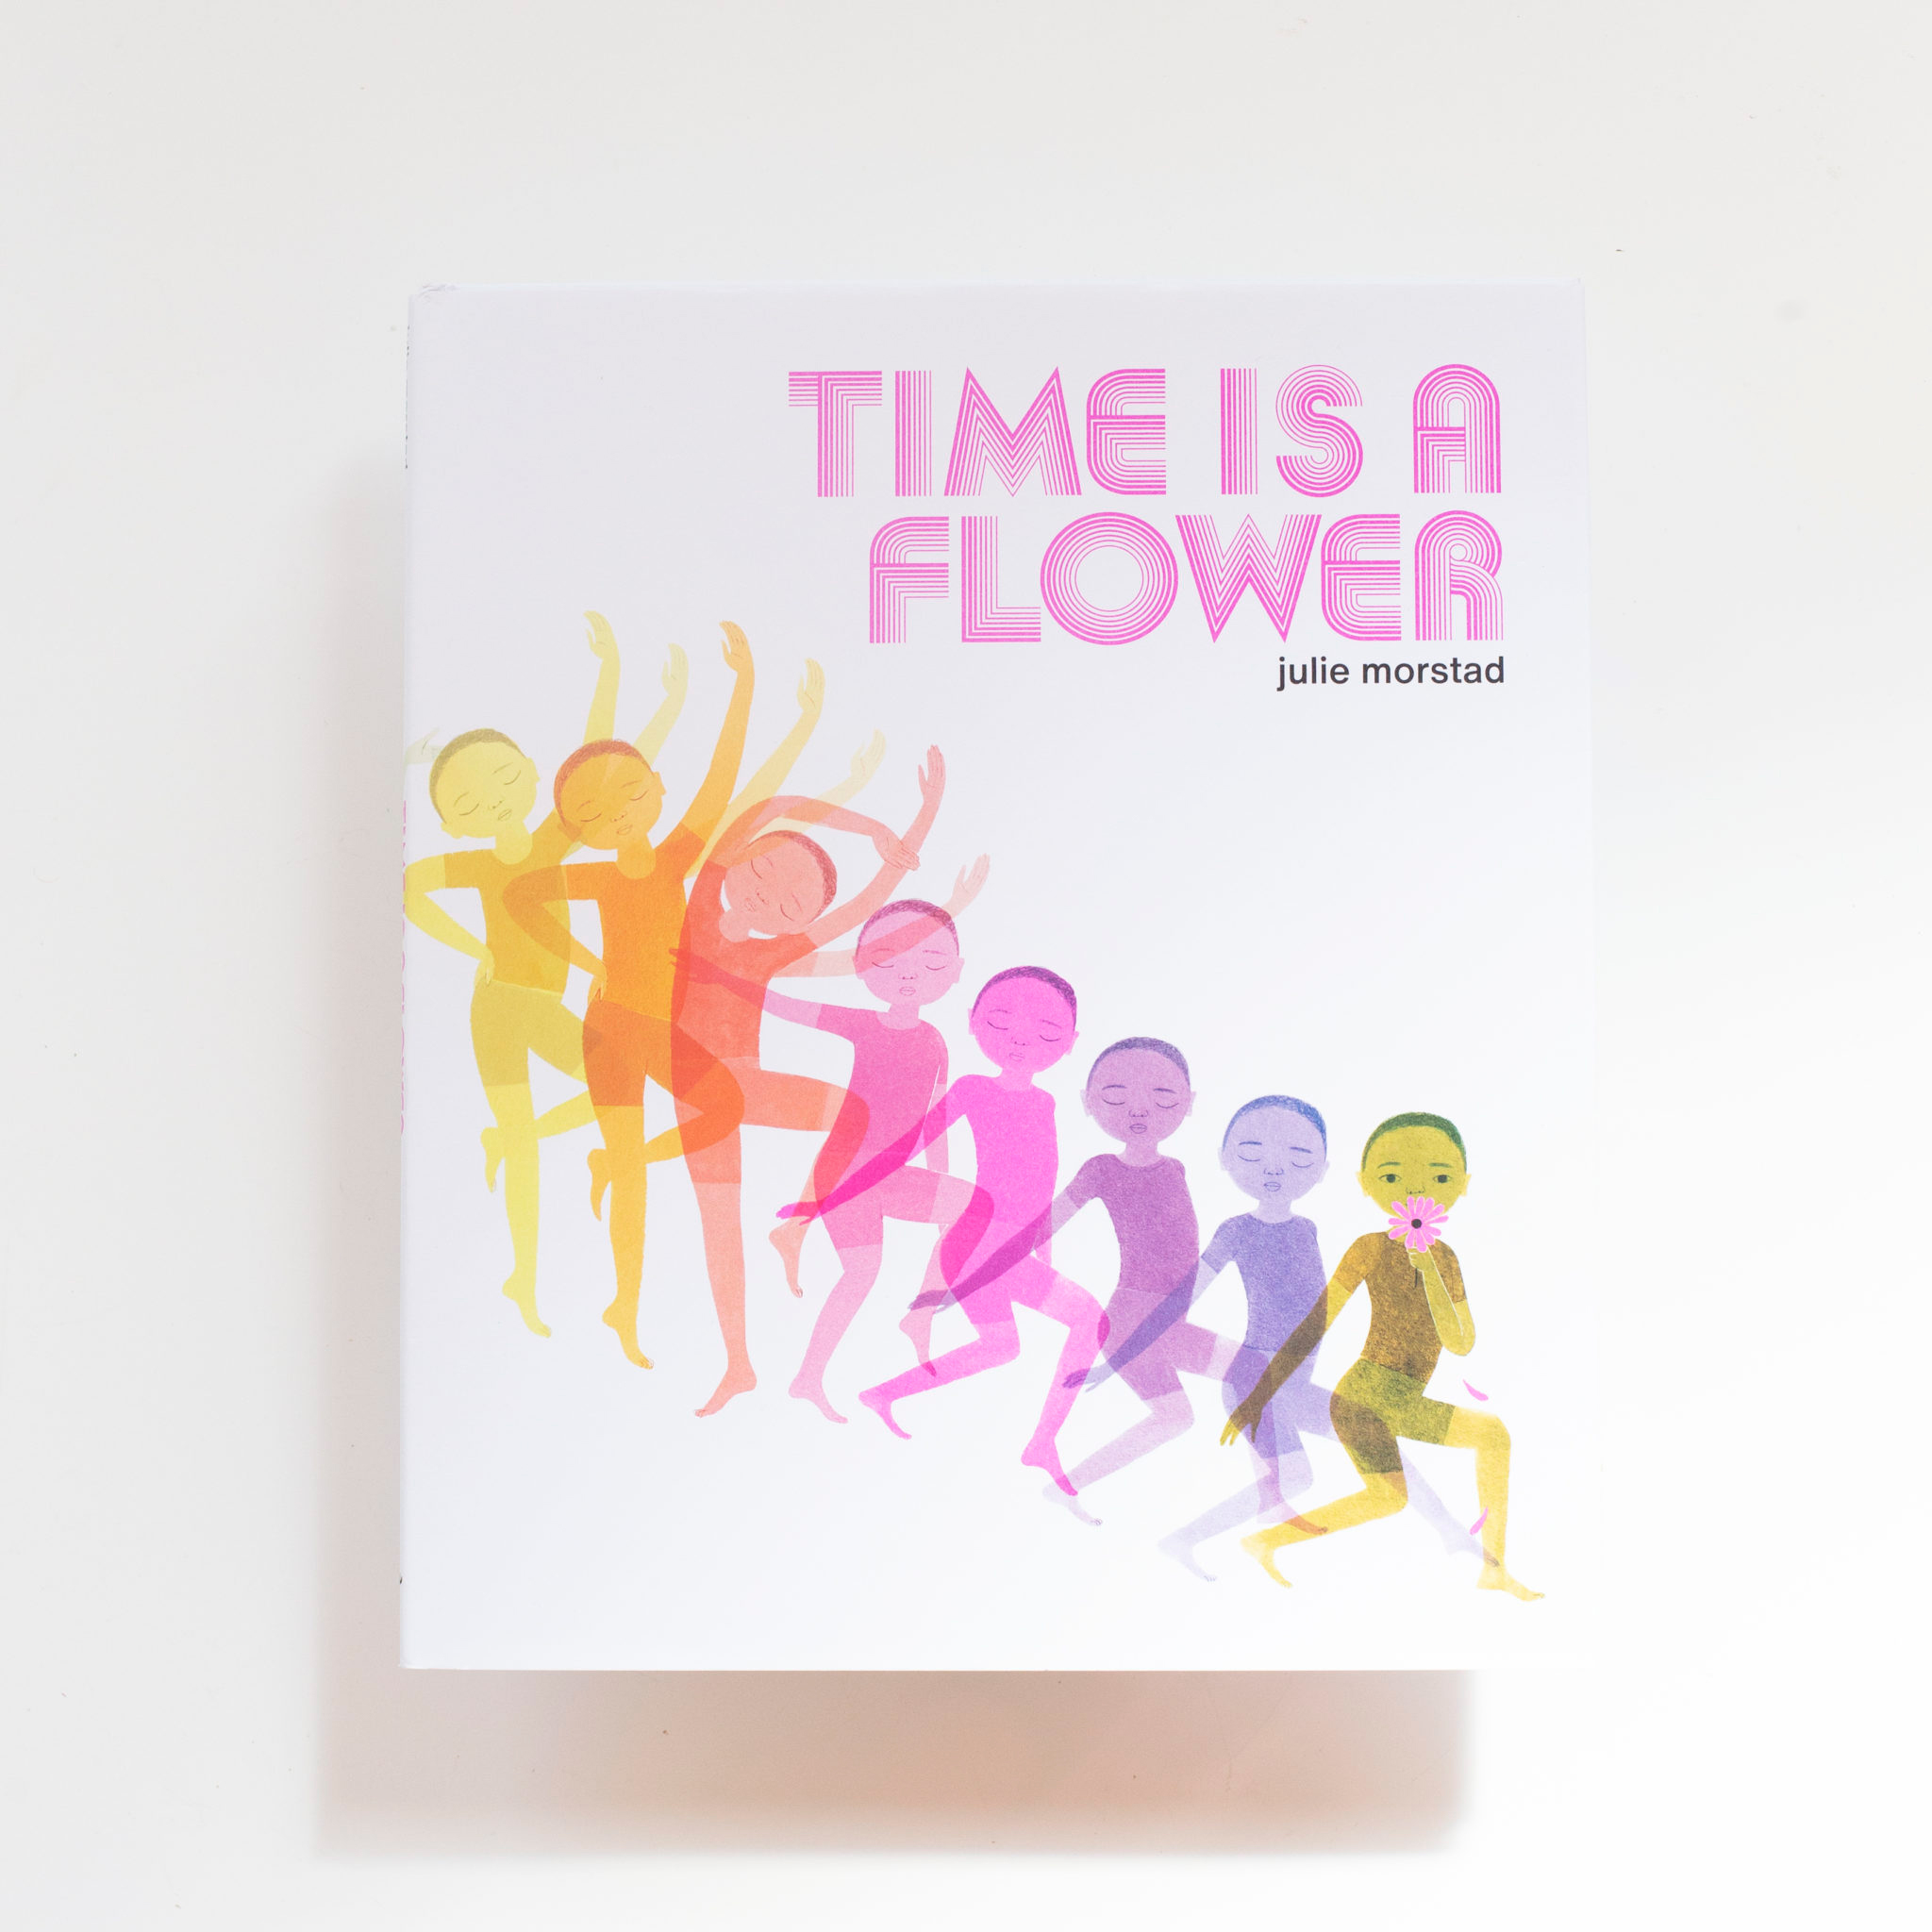 Time is a Flower by Julie Morstad